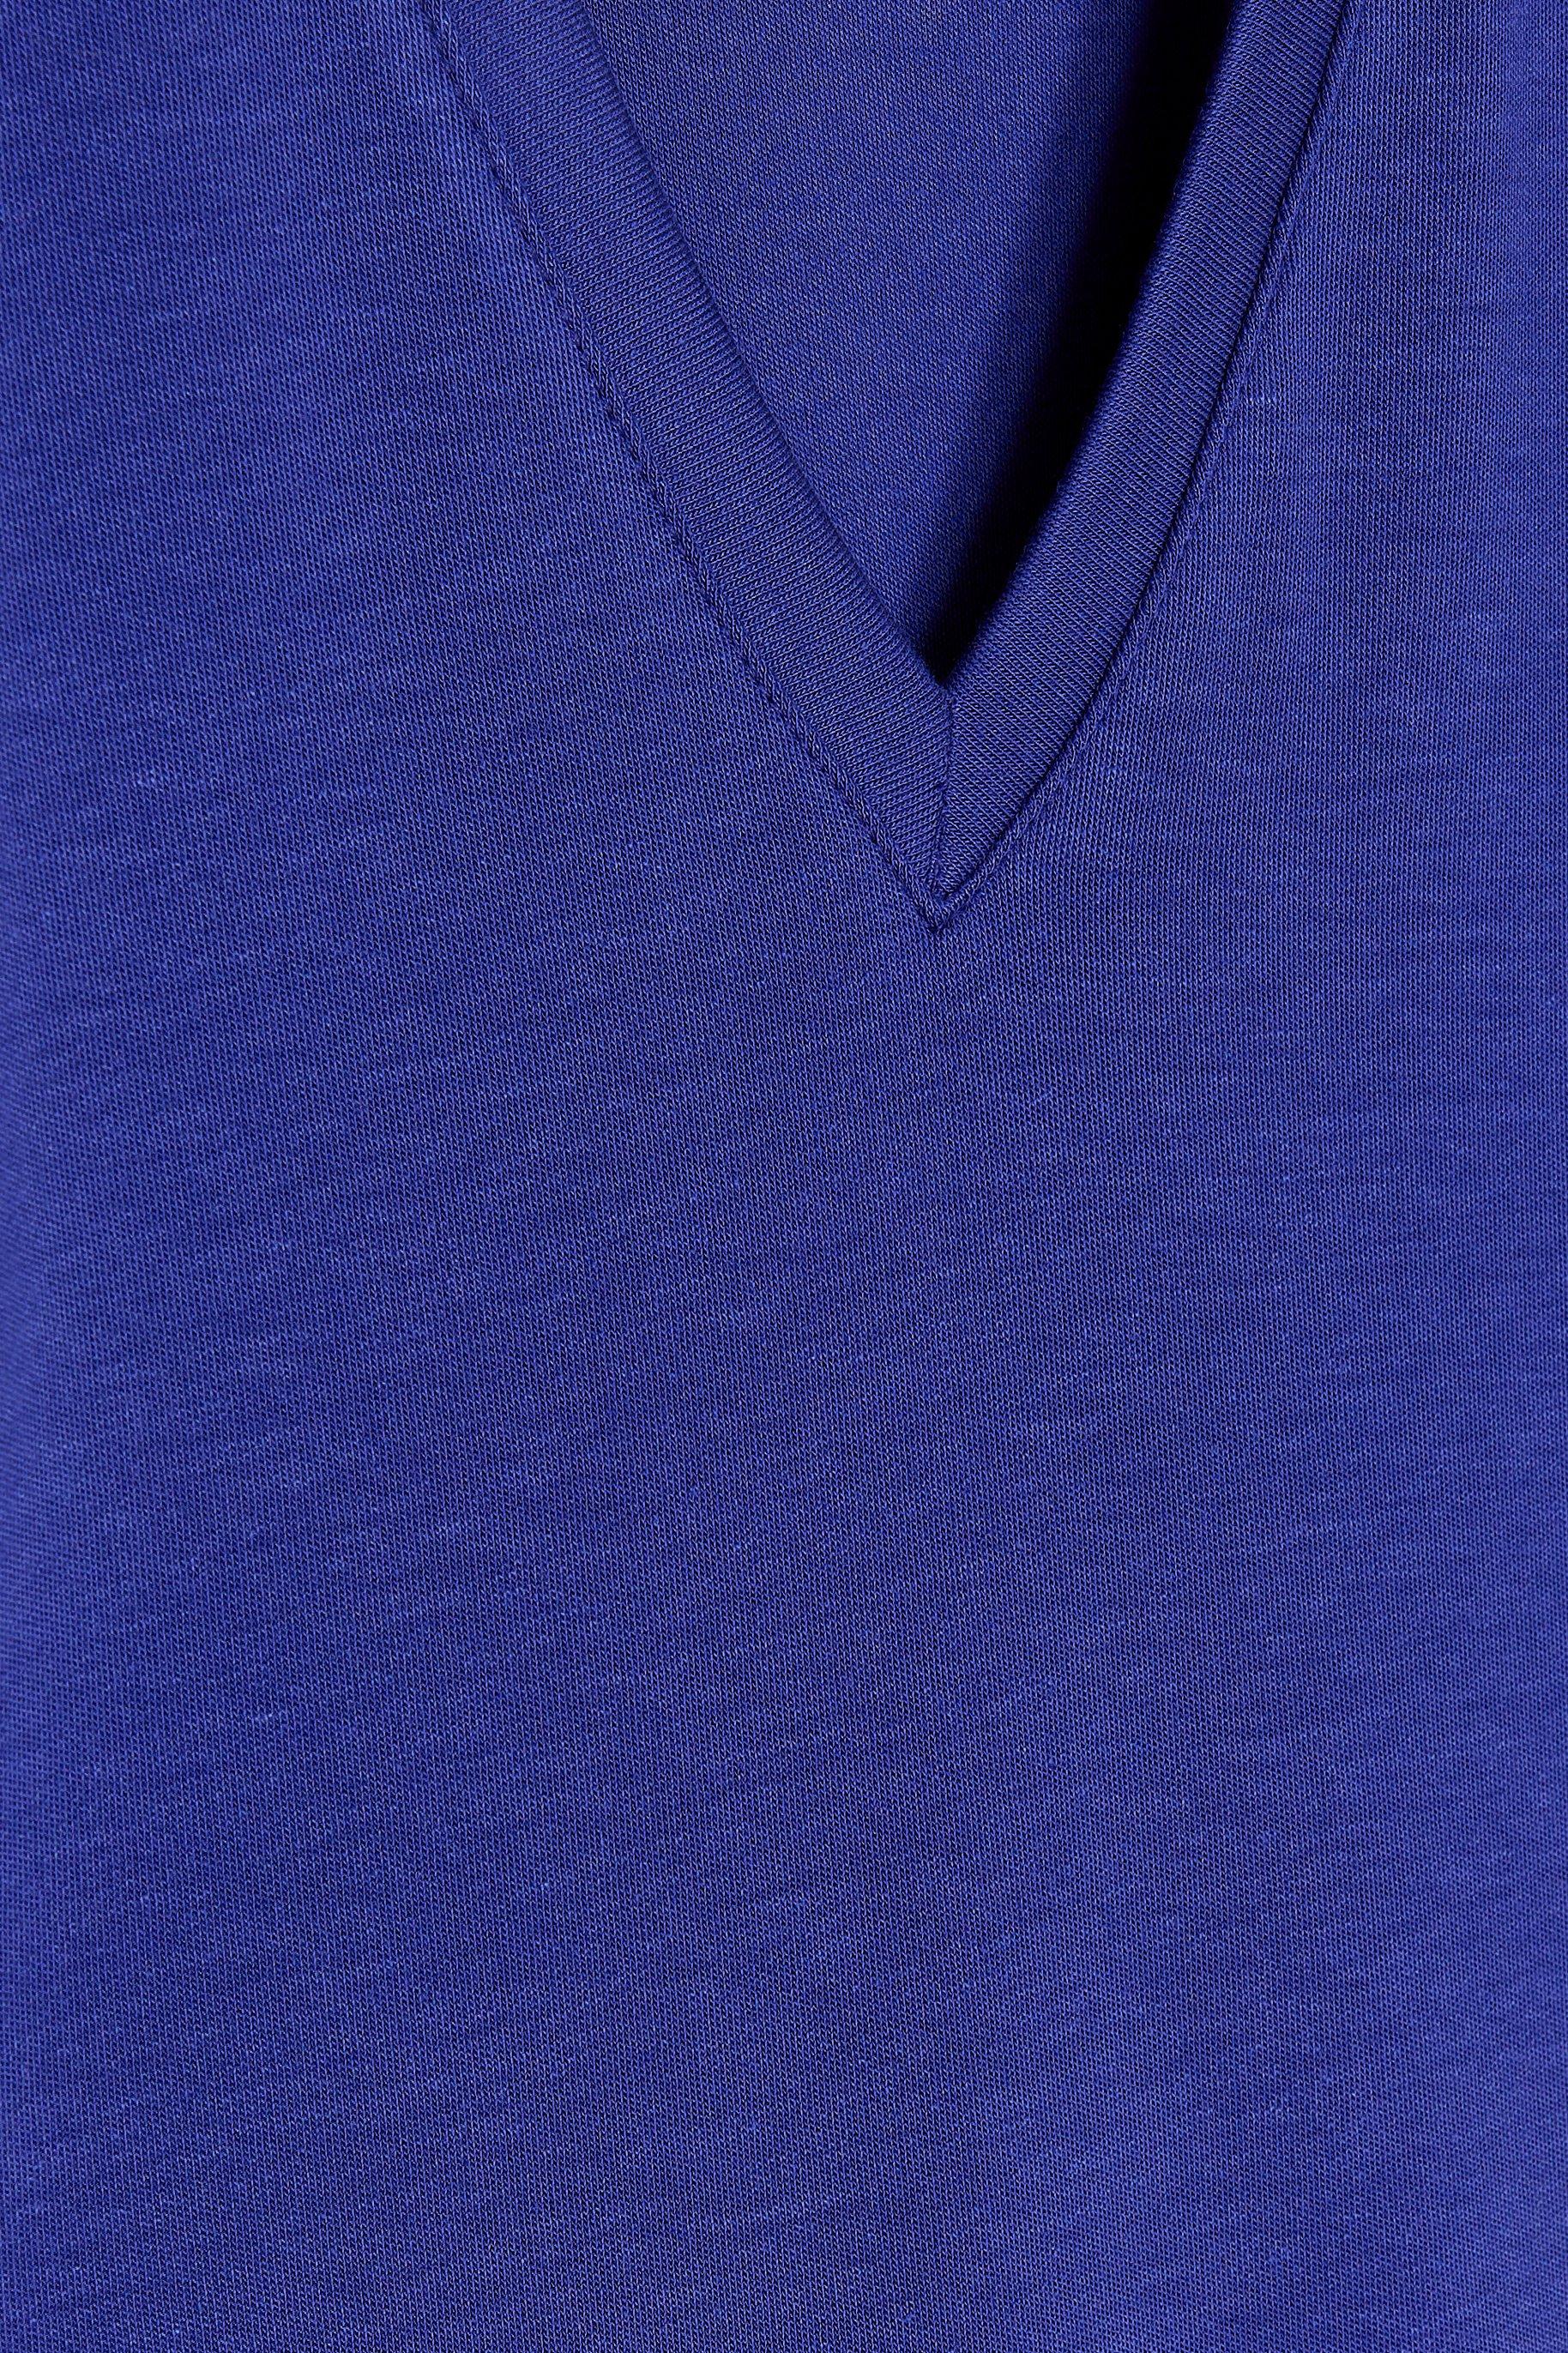 CKS Dames - TIKO - t-shirt à manches courtes - bleu foncé